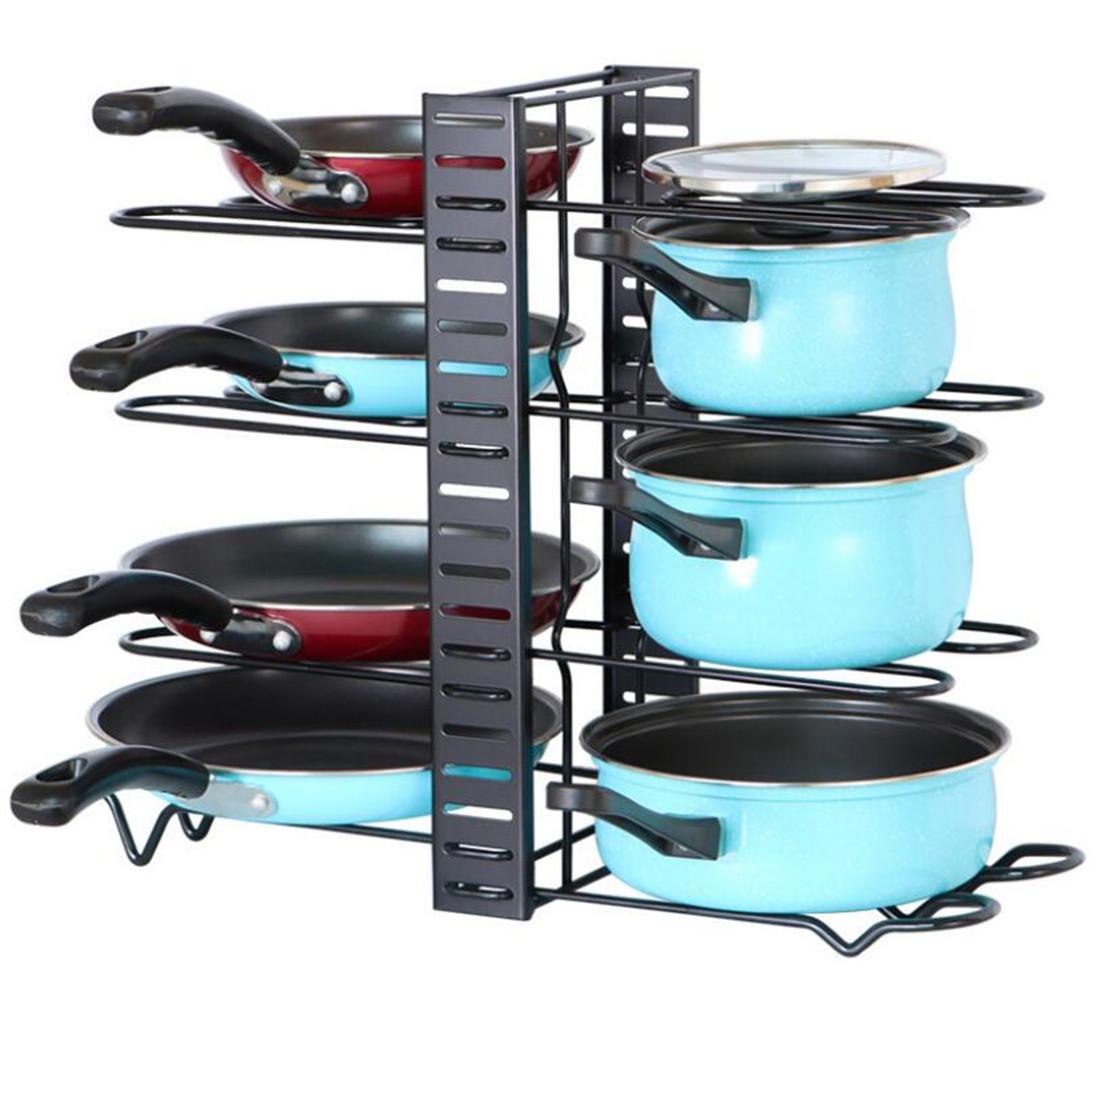 Organizador de almacenamiento de cocina con estante para ollas de 8 niveles